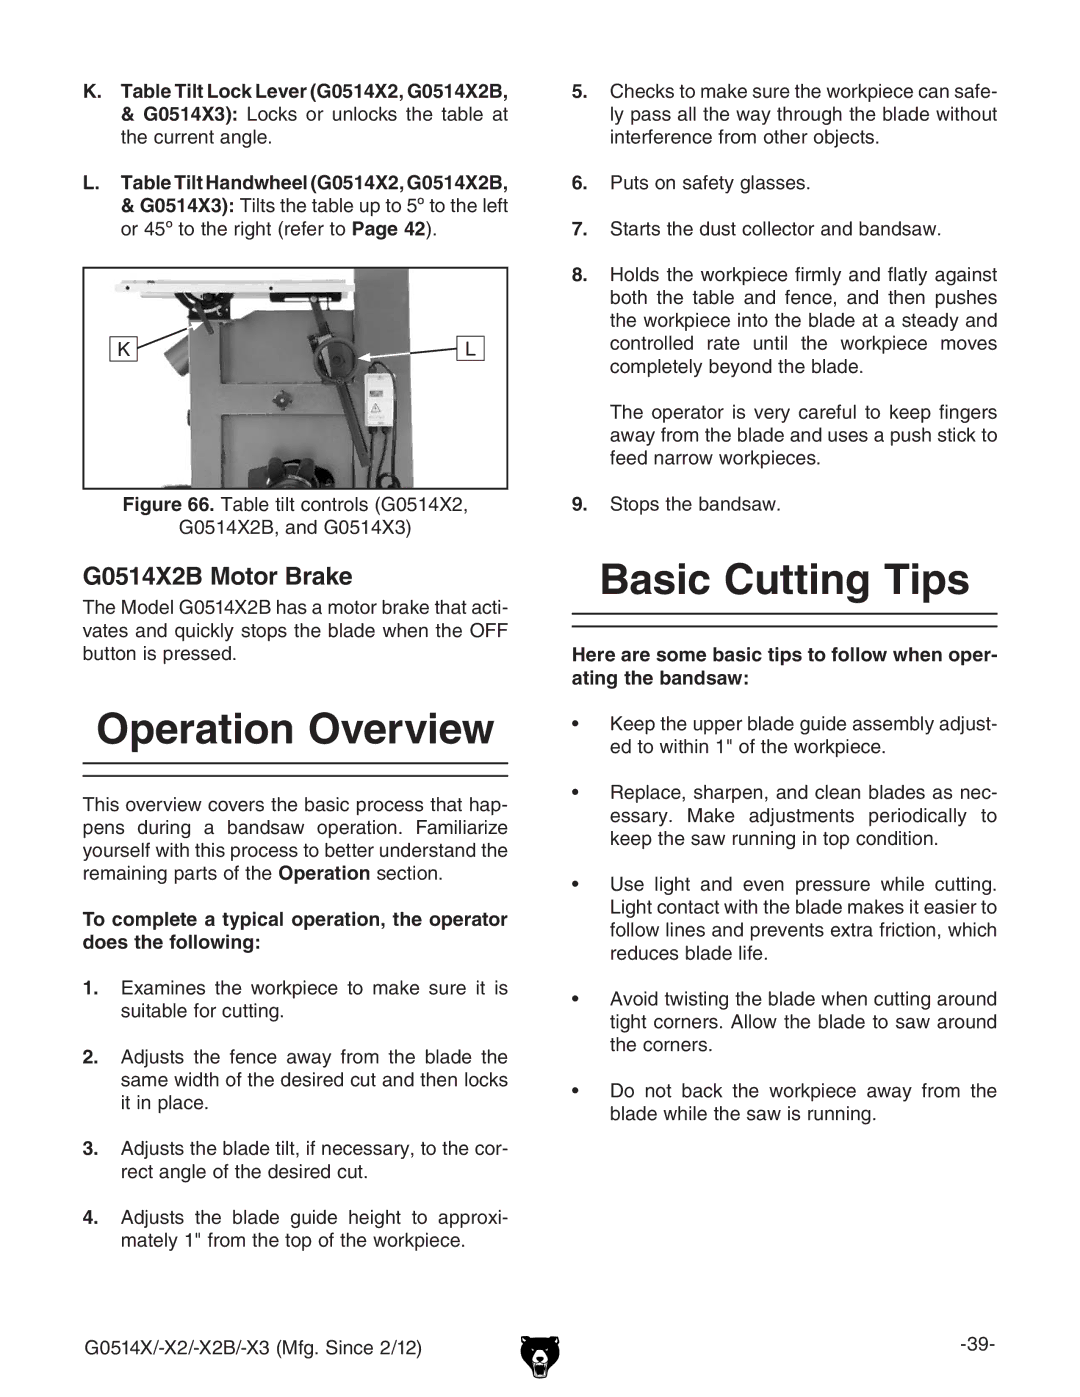 Grizzly Operation Overview, Basic Cutting Tips, G0514X2B Motor Brake,  Table Tilt Handwheel G0514X2, G0514X2B 